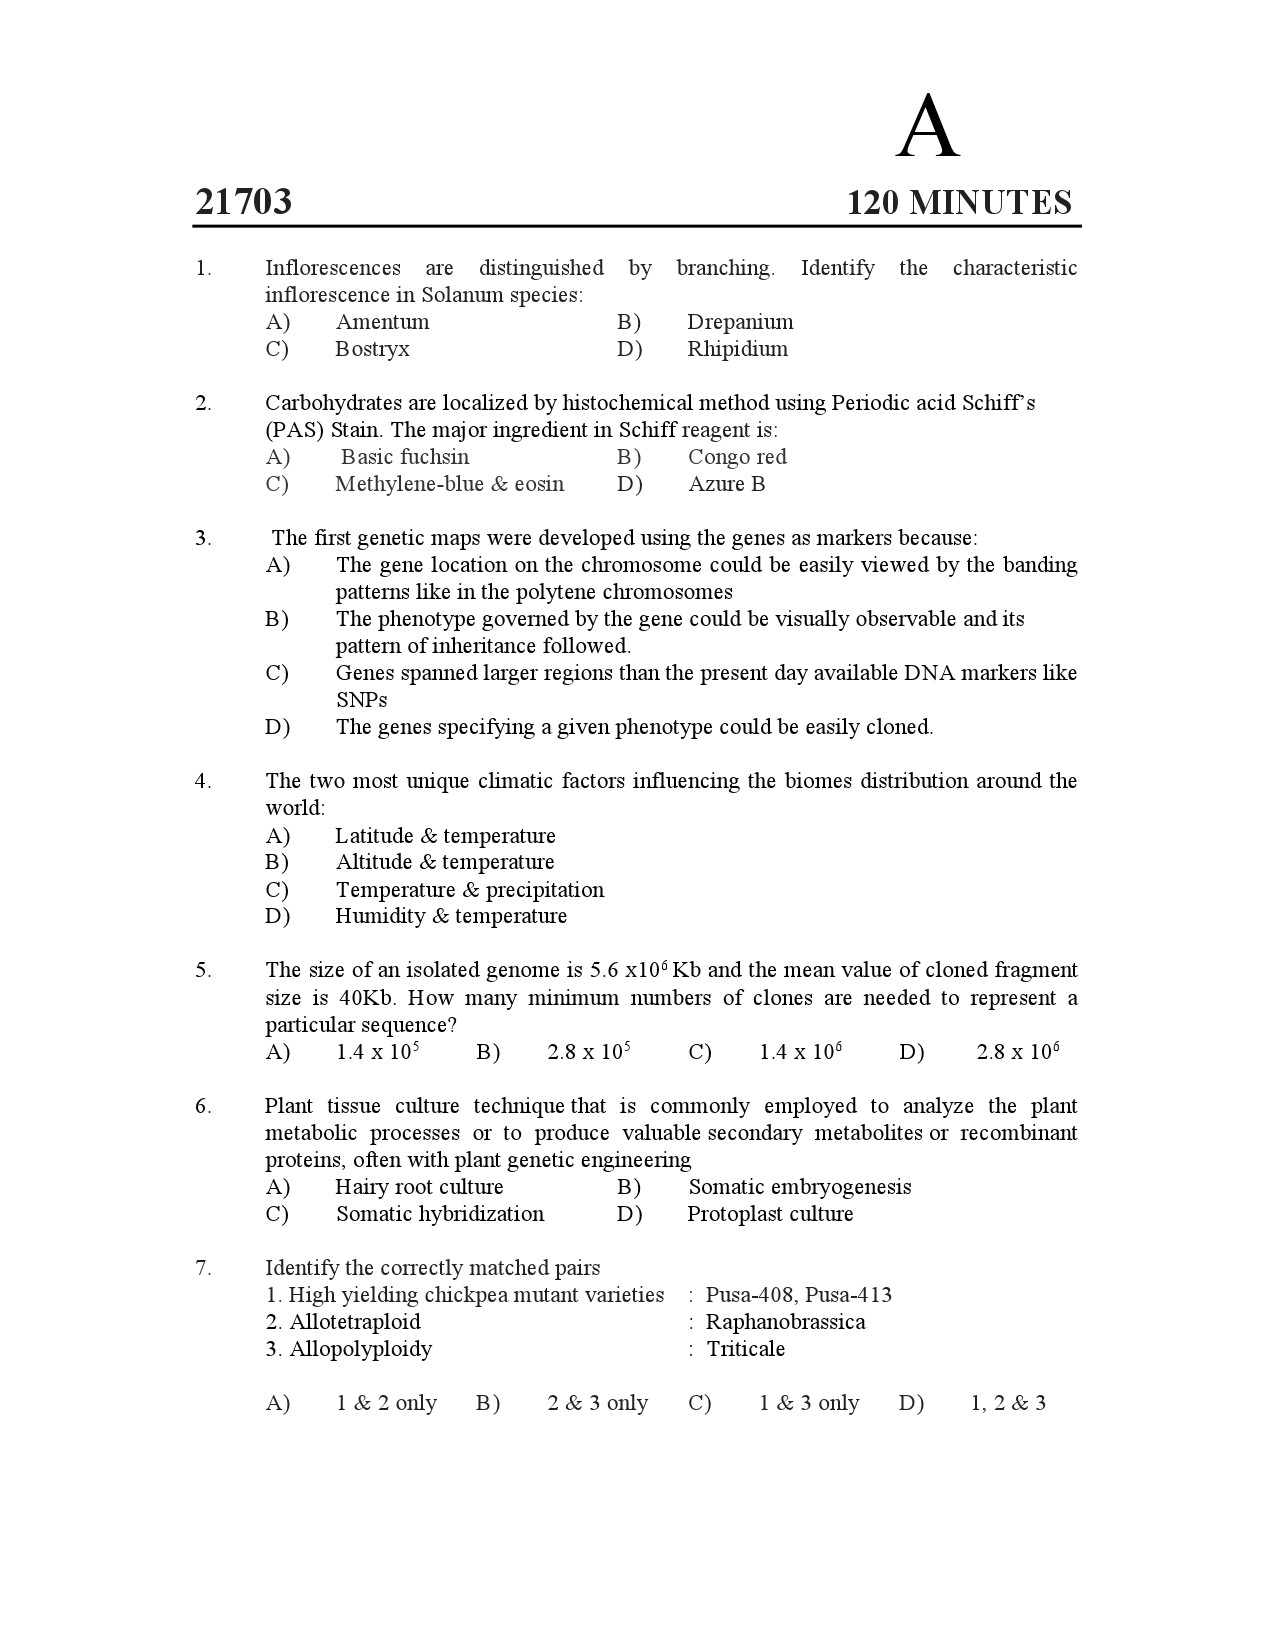 Kerala SET Botany Exam Question Paper July 2021 1